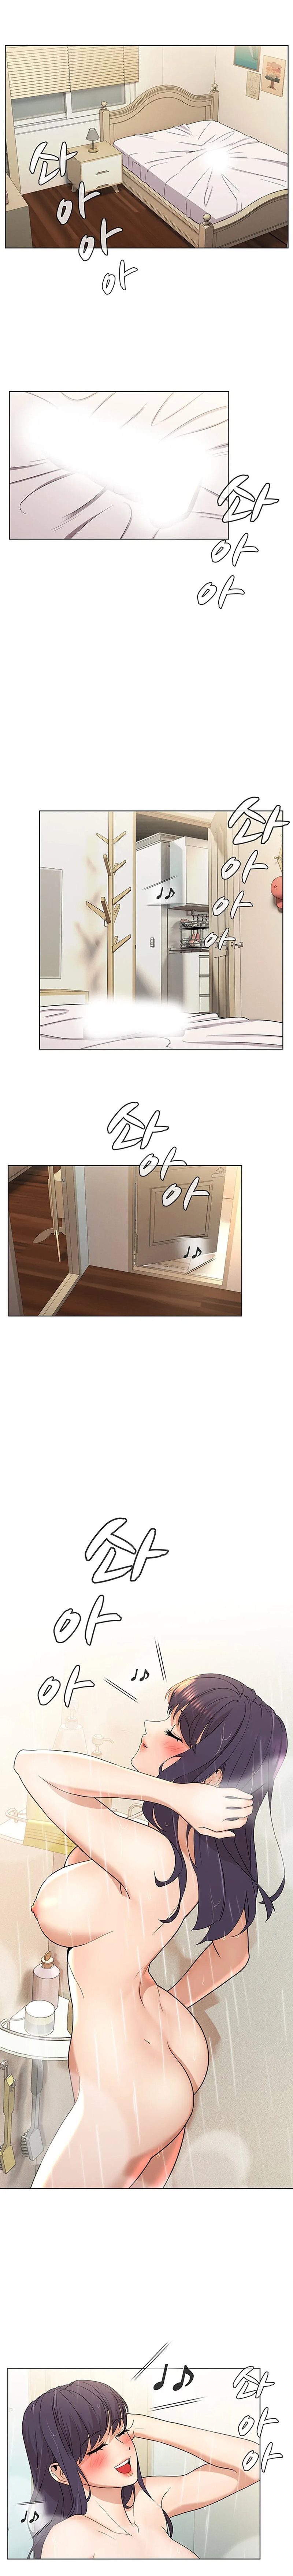 Eunha’s Advice - Chapter 5 Page 7